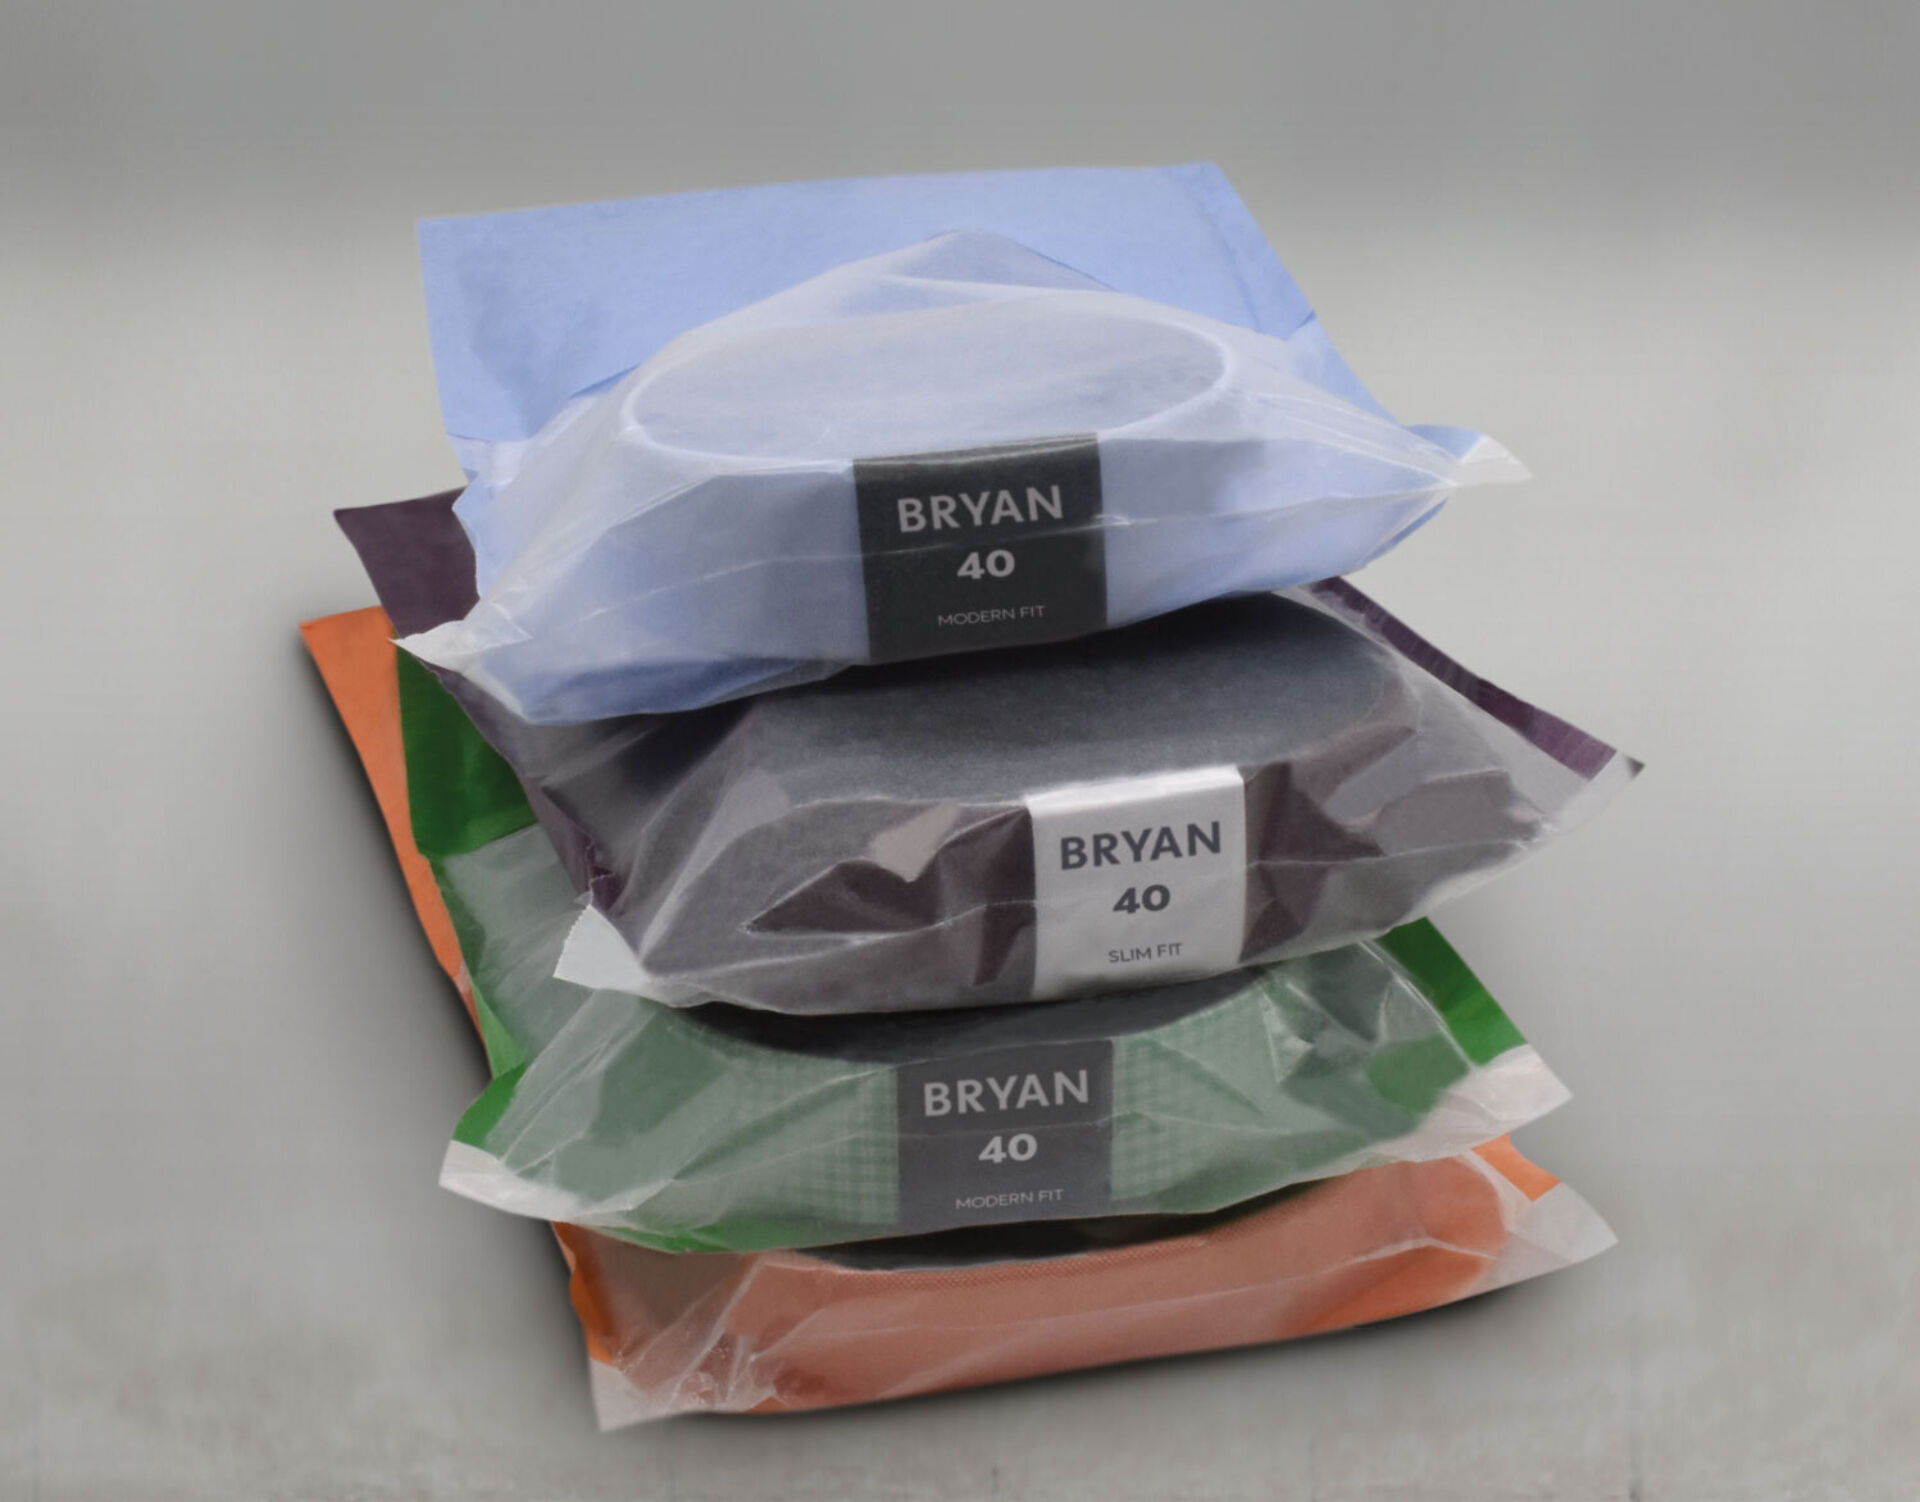 reLoc Bag Textil von WEBER Verpackungen